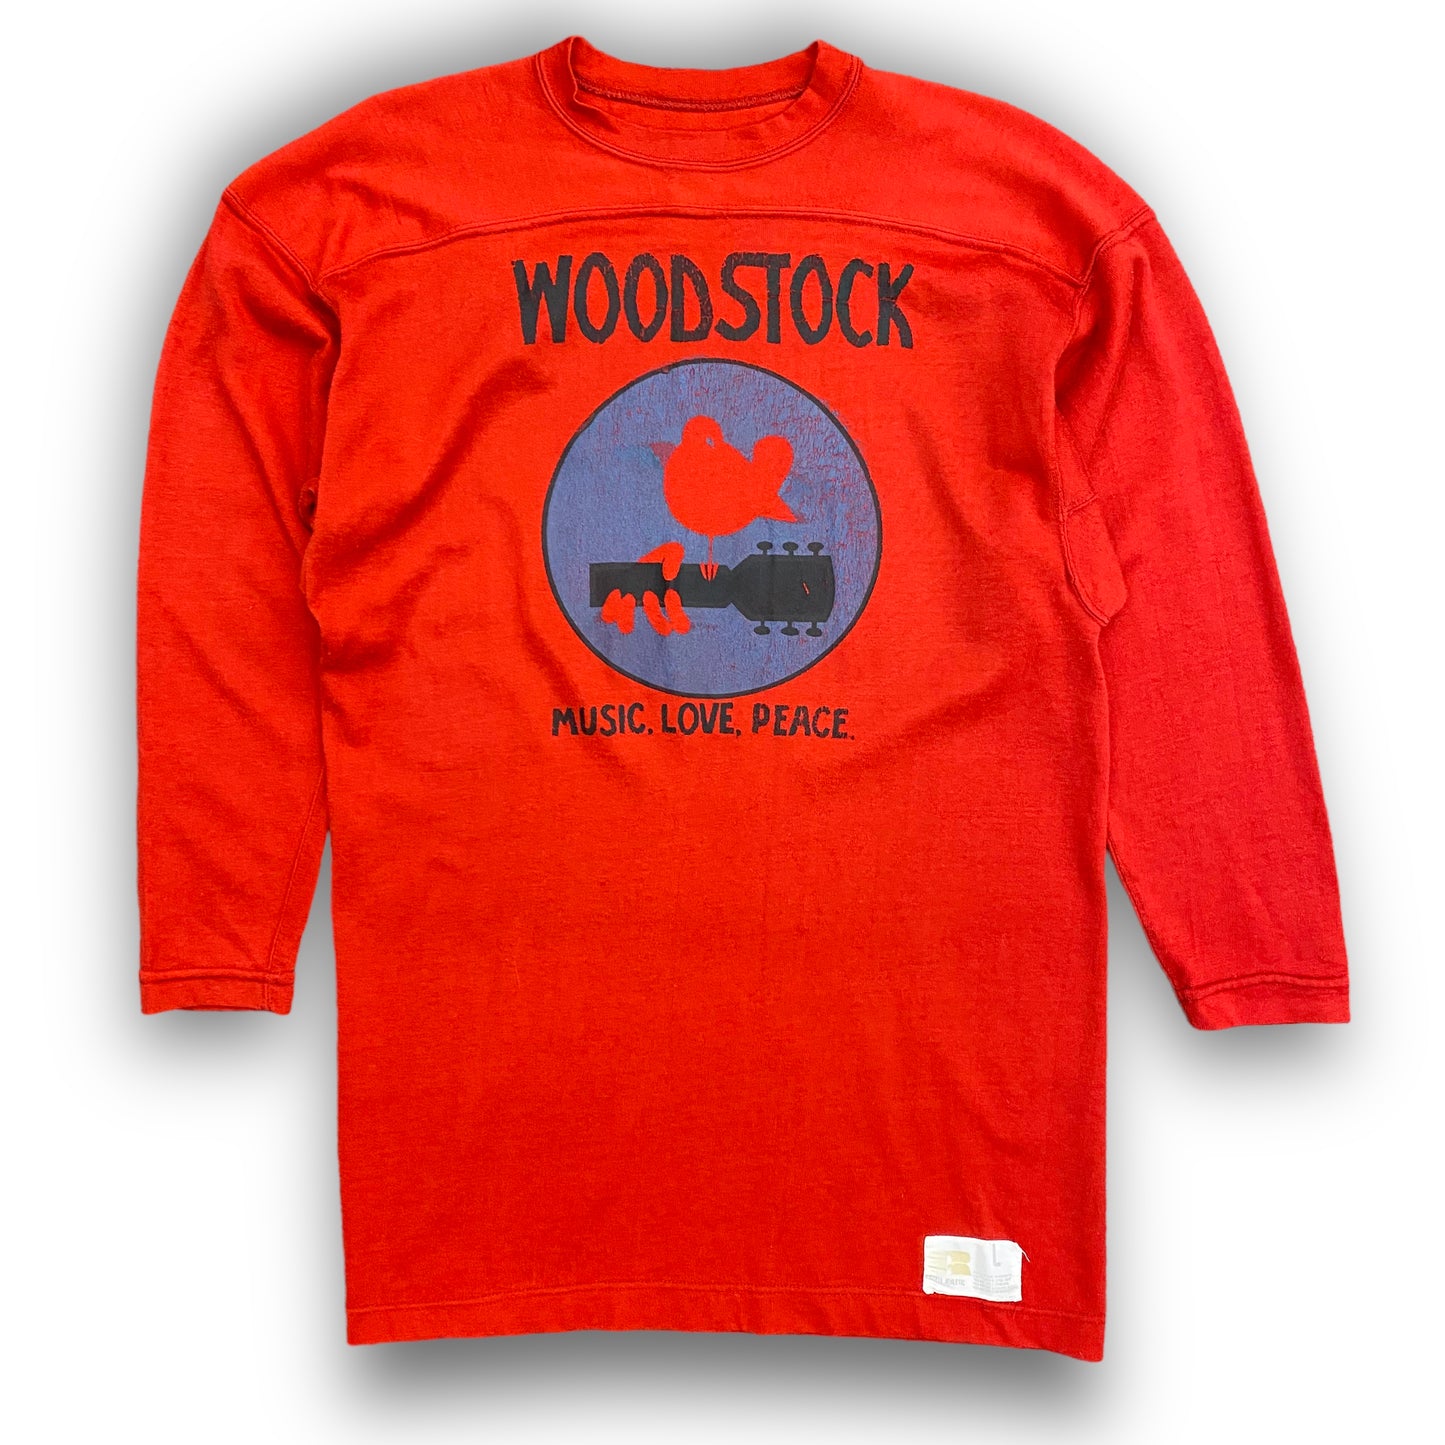 Vintage Original Woodstock 1969 Festival "Music, Love, Peace" Red Long Sleeve - Size Large